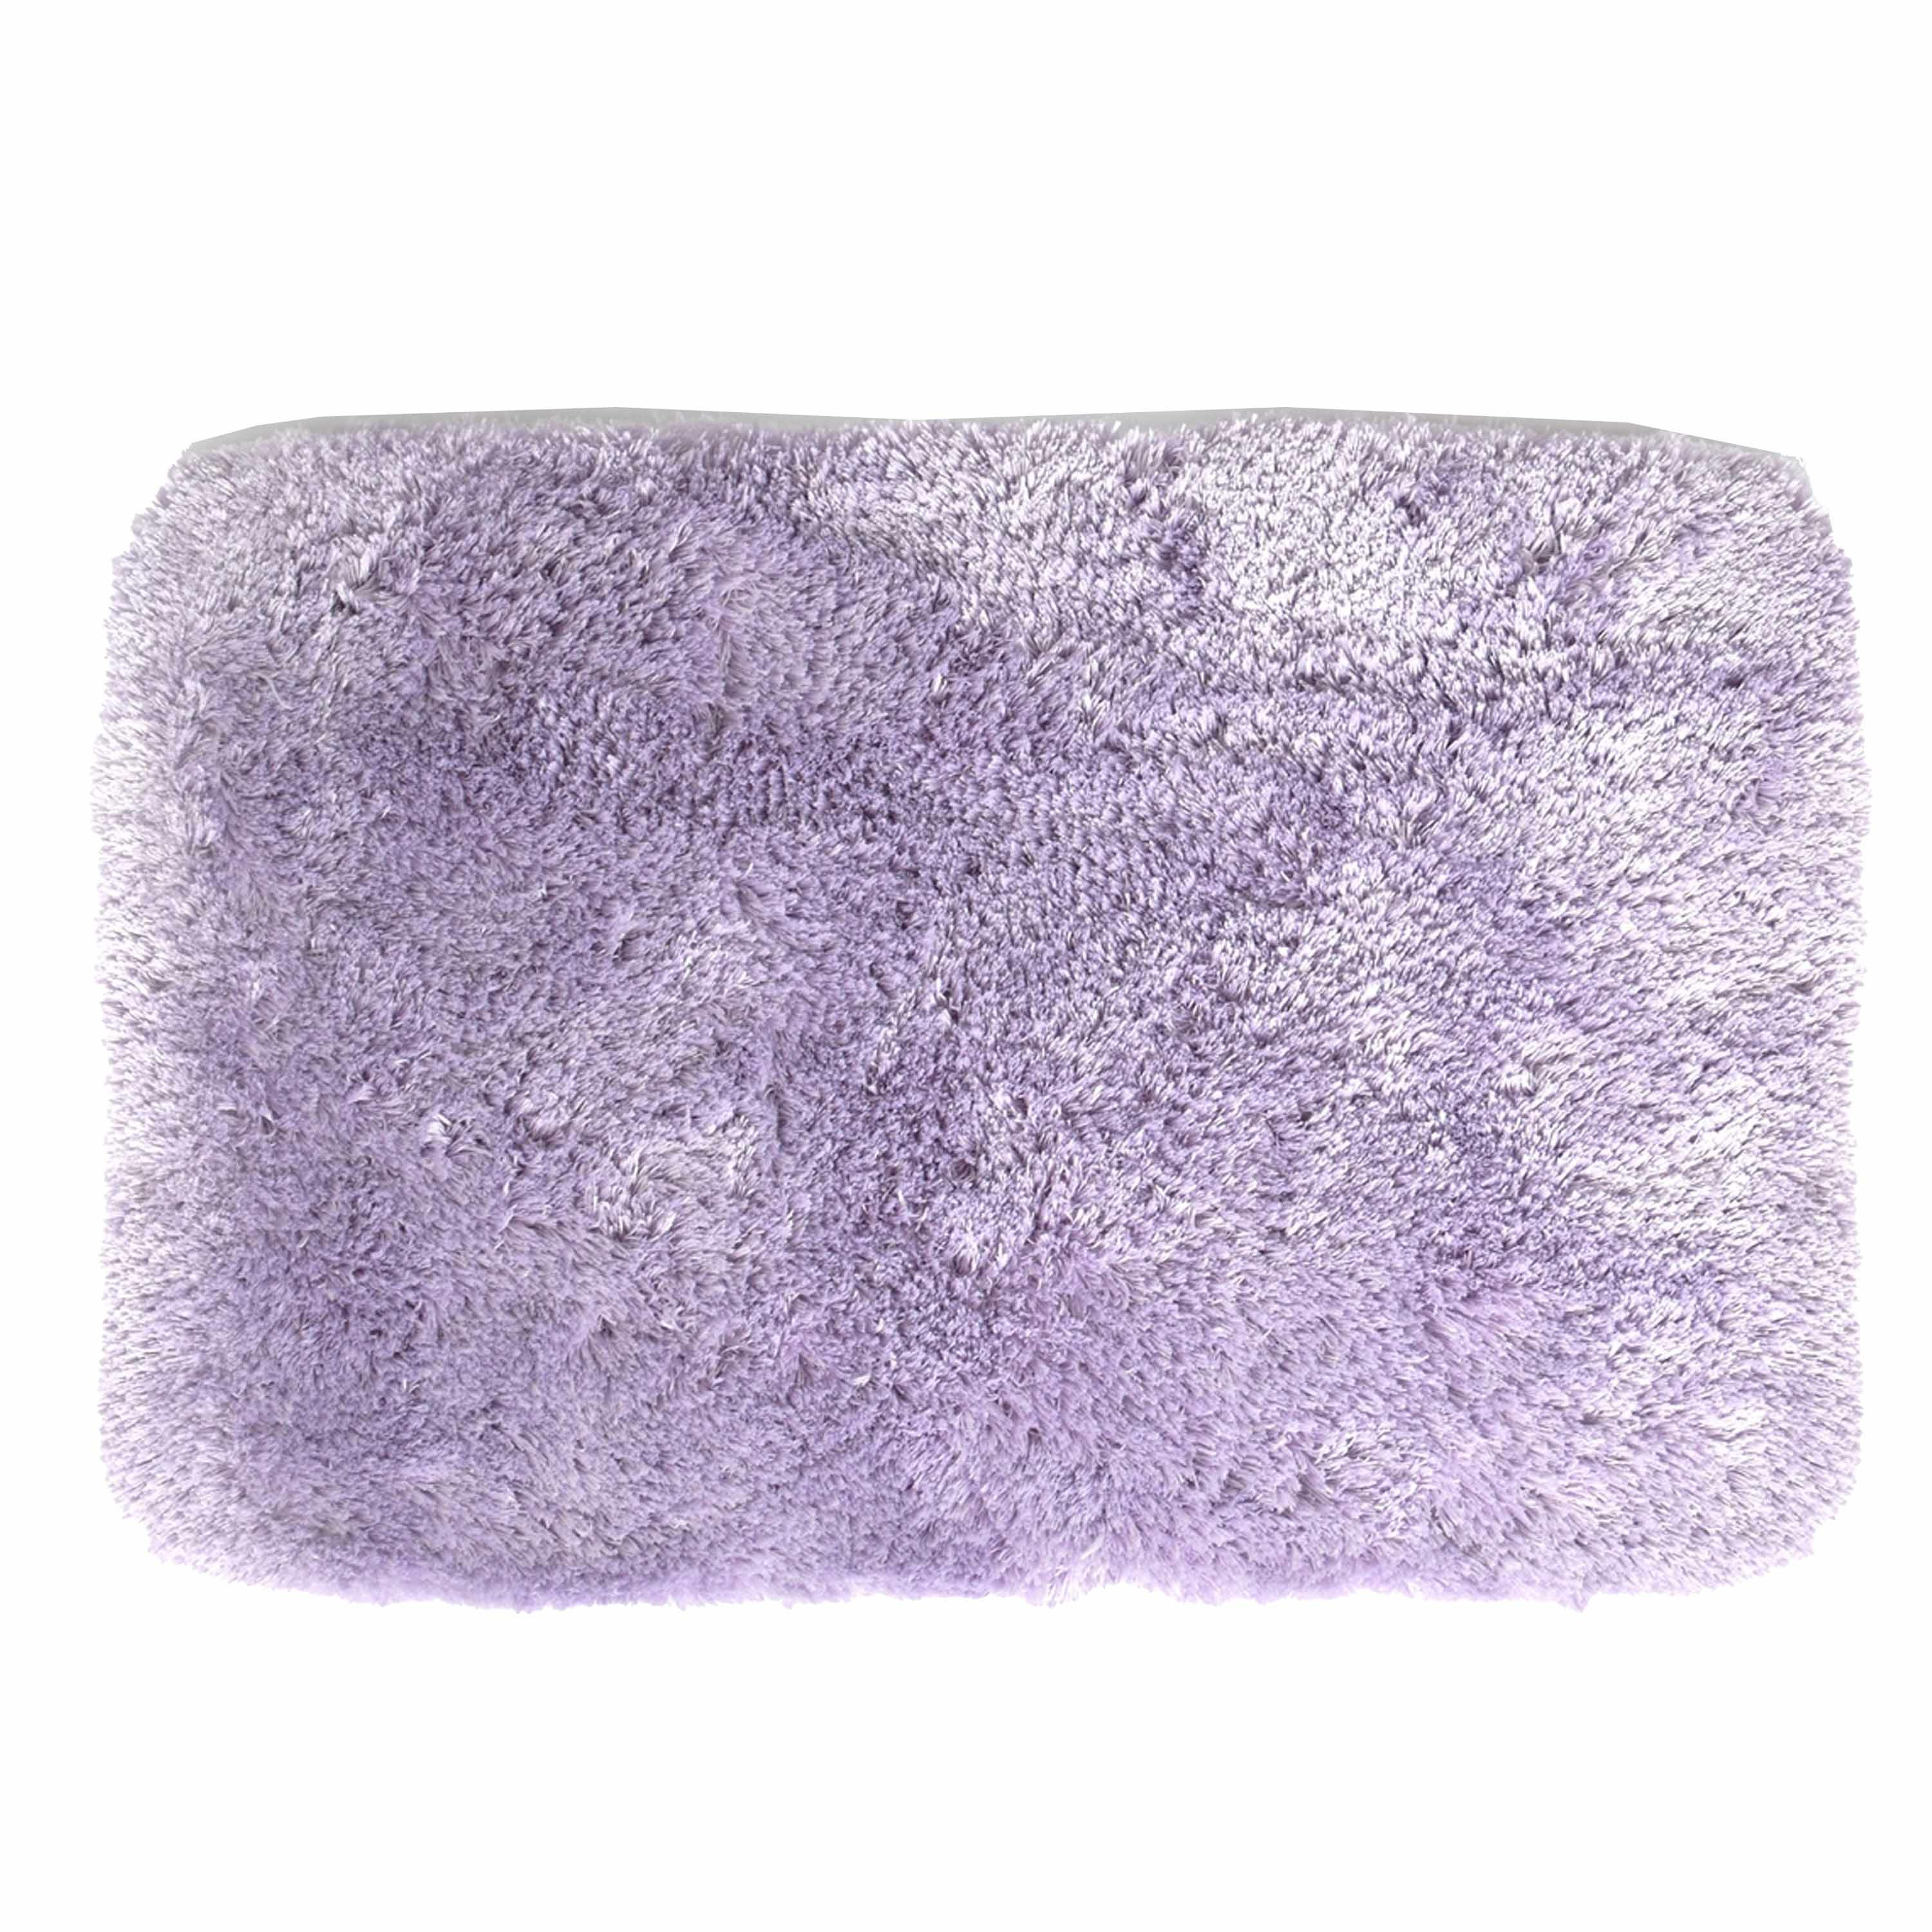 Spirella badkamer vloer kleedje-badmat tapijt hoogpolig en luxe uitvoering lila paars 40 x 60 cm Mic